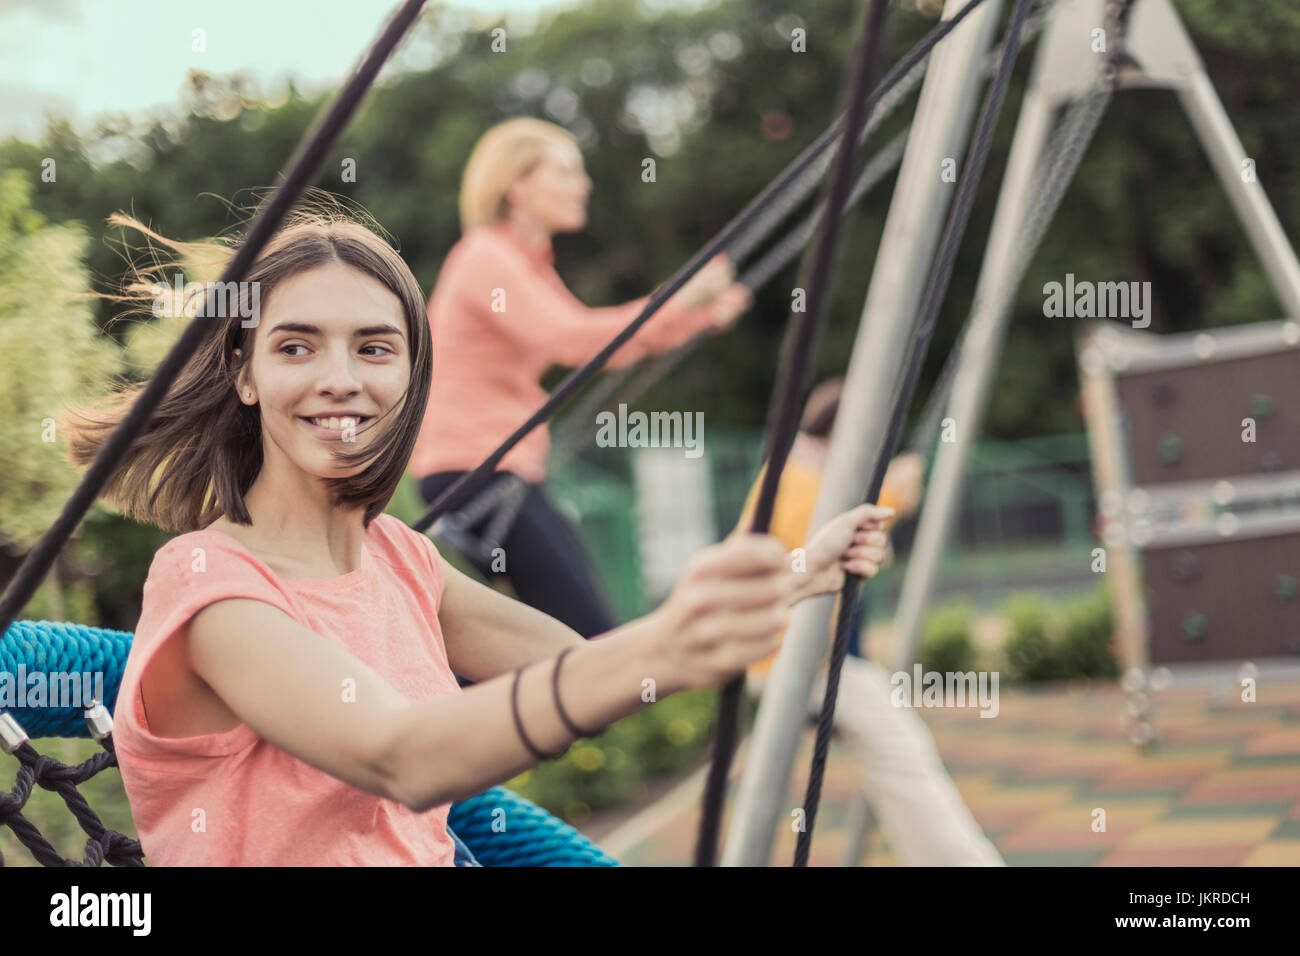 Smiling women swinging on swing at playground Stock Photo